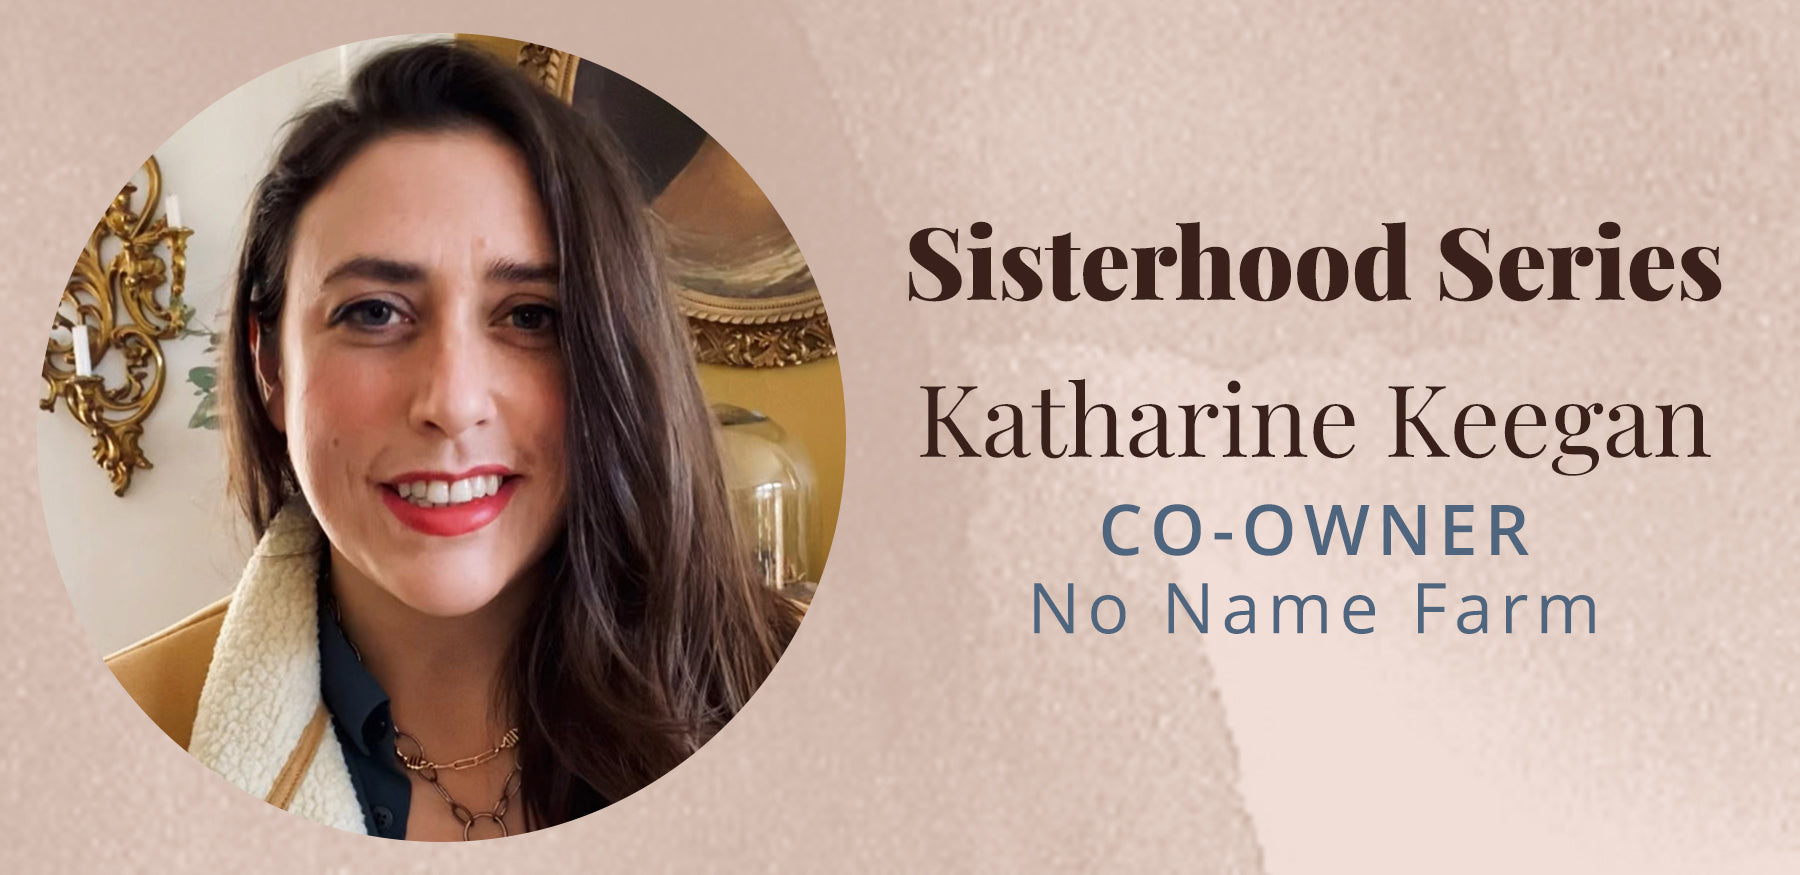 Sisterhood Series with Katherine Keegan